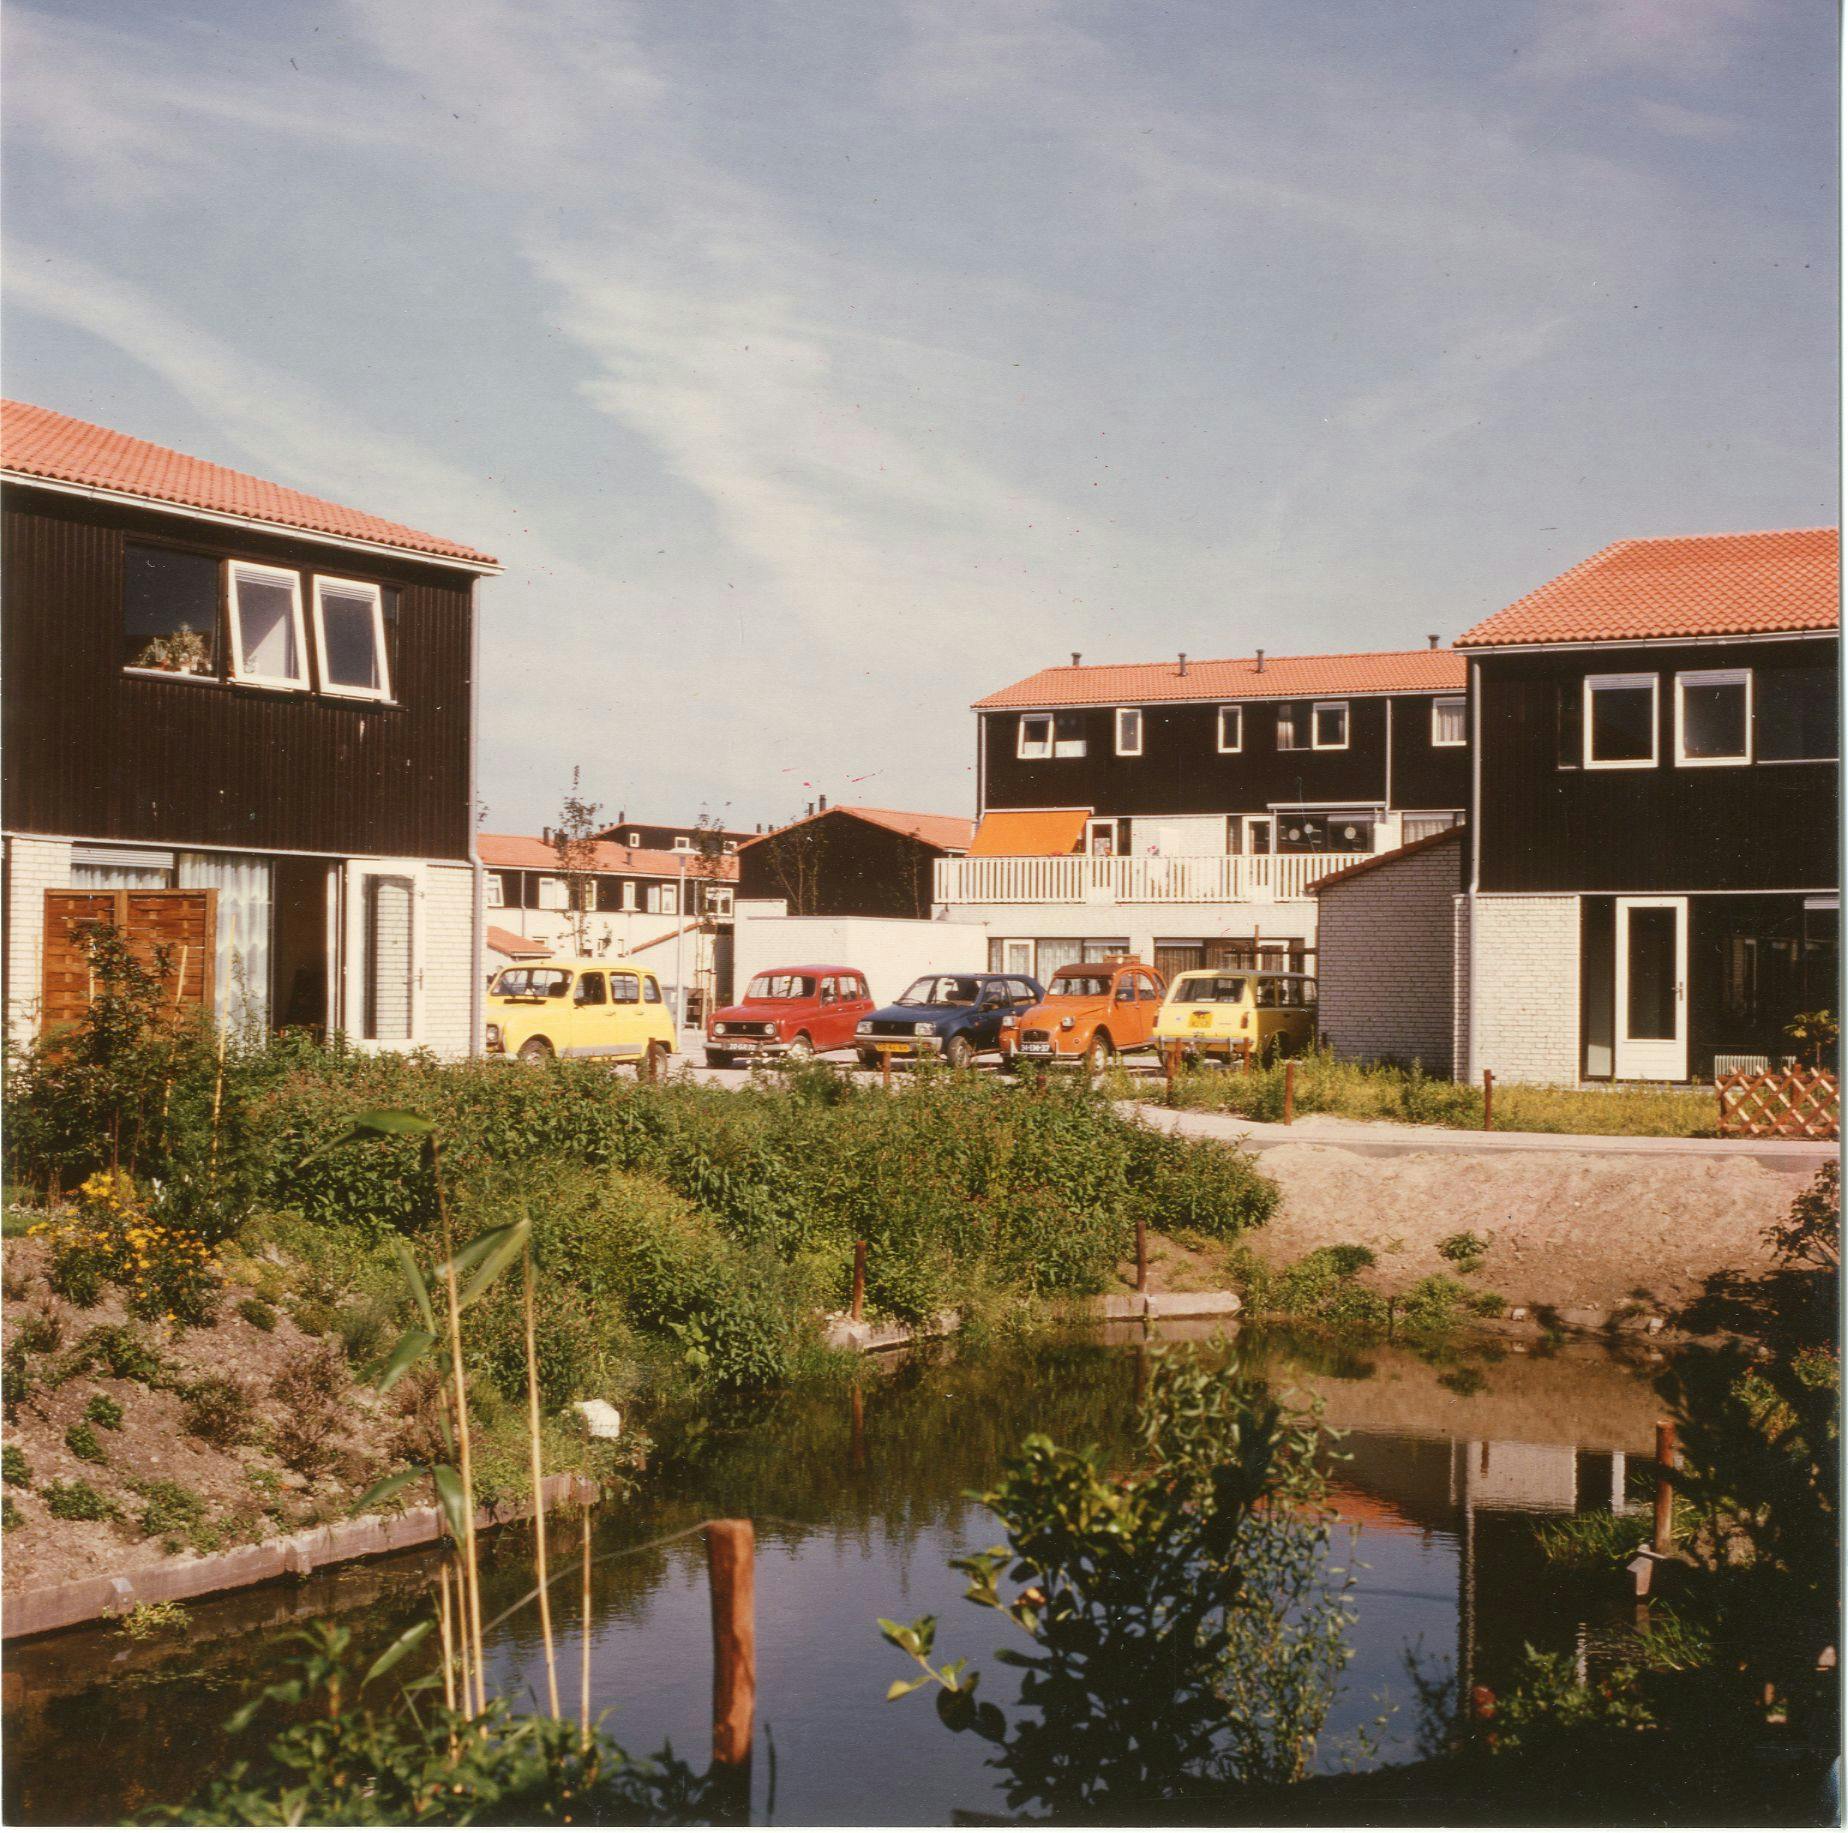 Van den Broek and Bakema. Tanthof residential neighbourhood, integrating water, parking, low-rise housing, 1975-1981. Collection Broekbakema. 